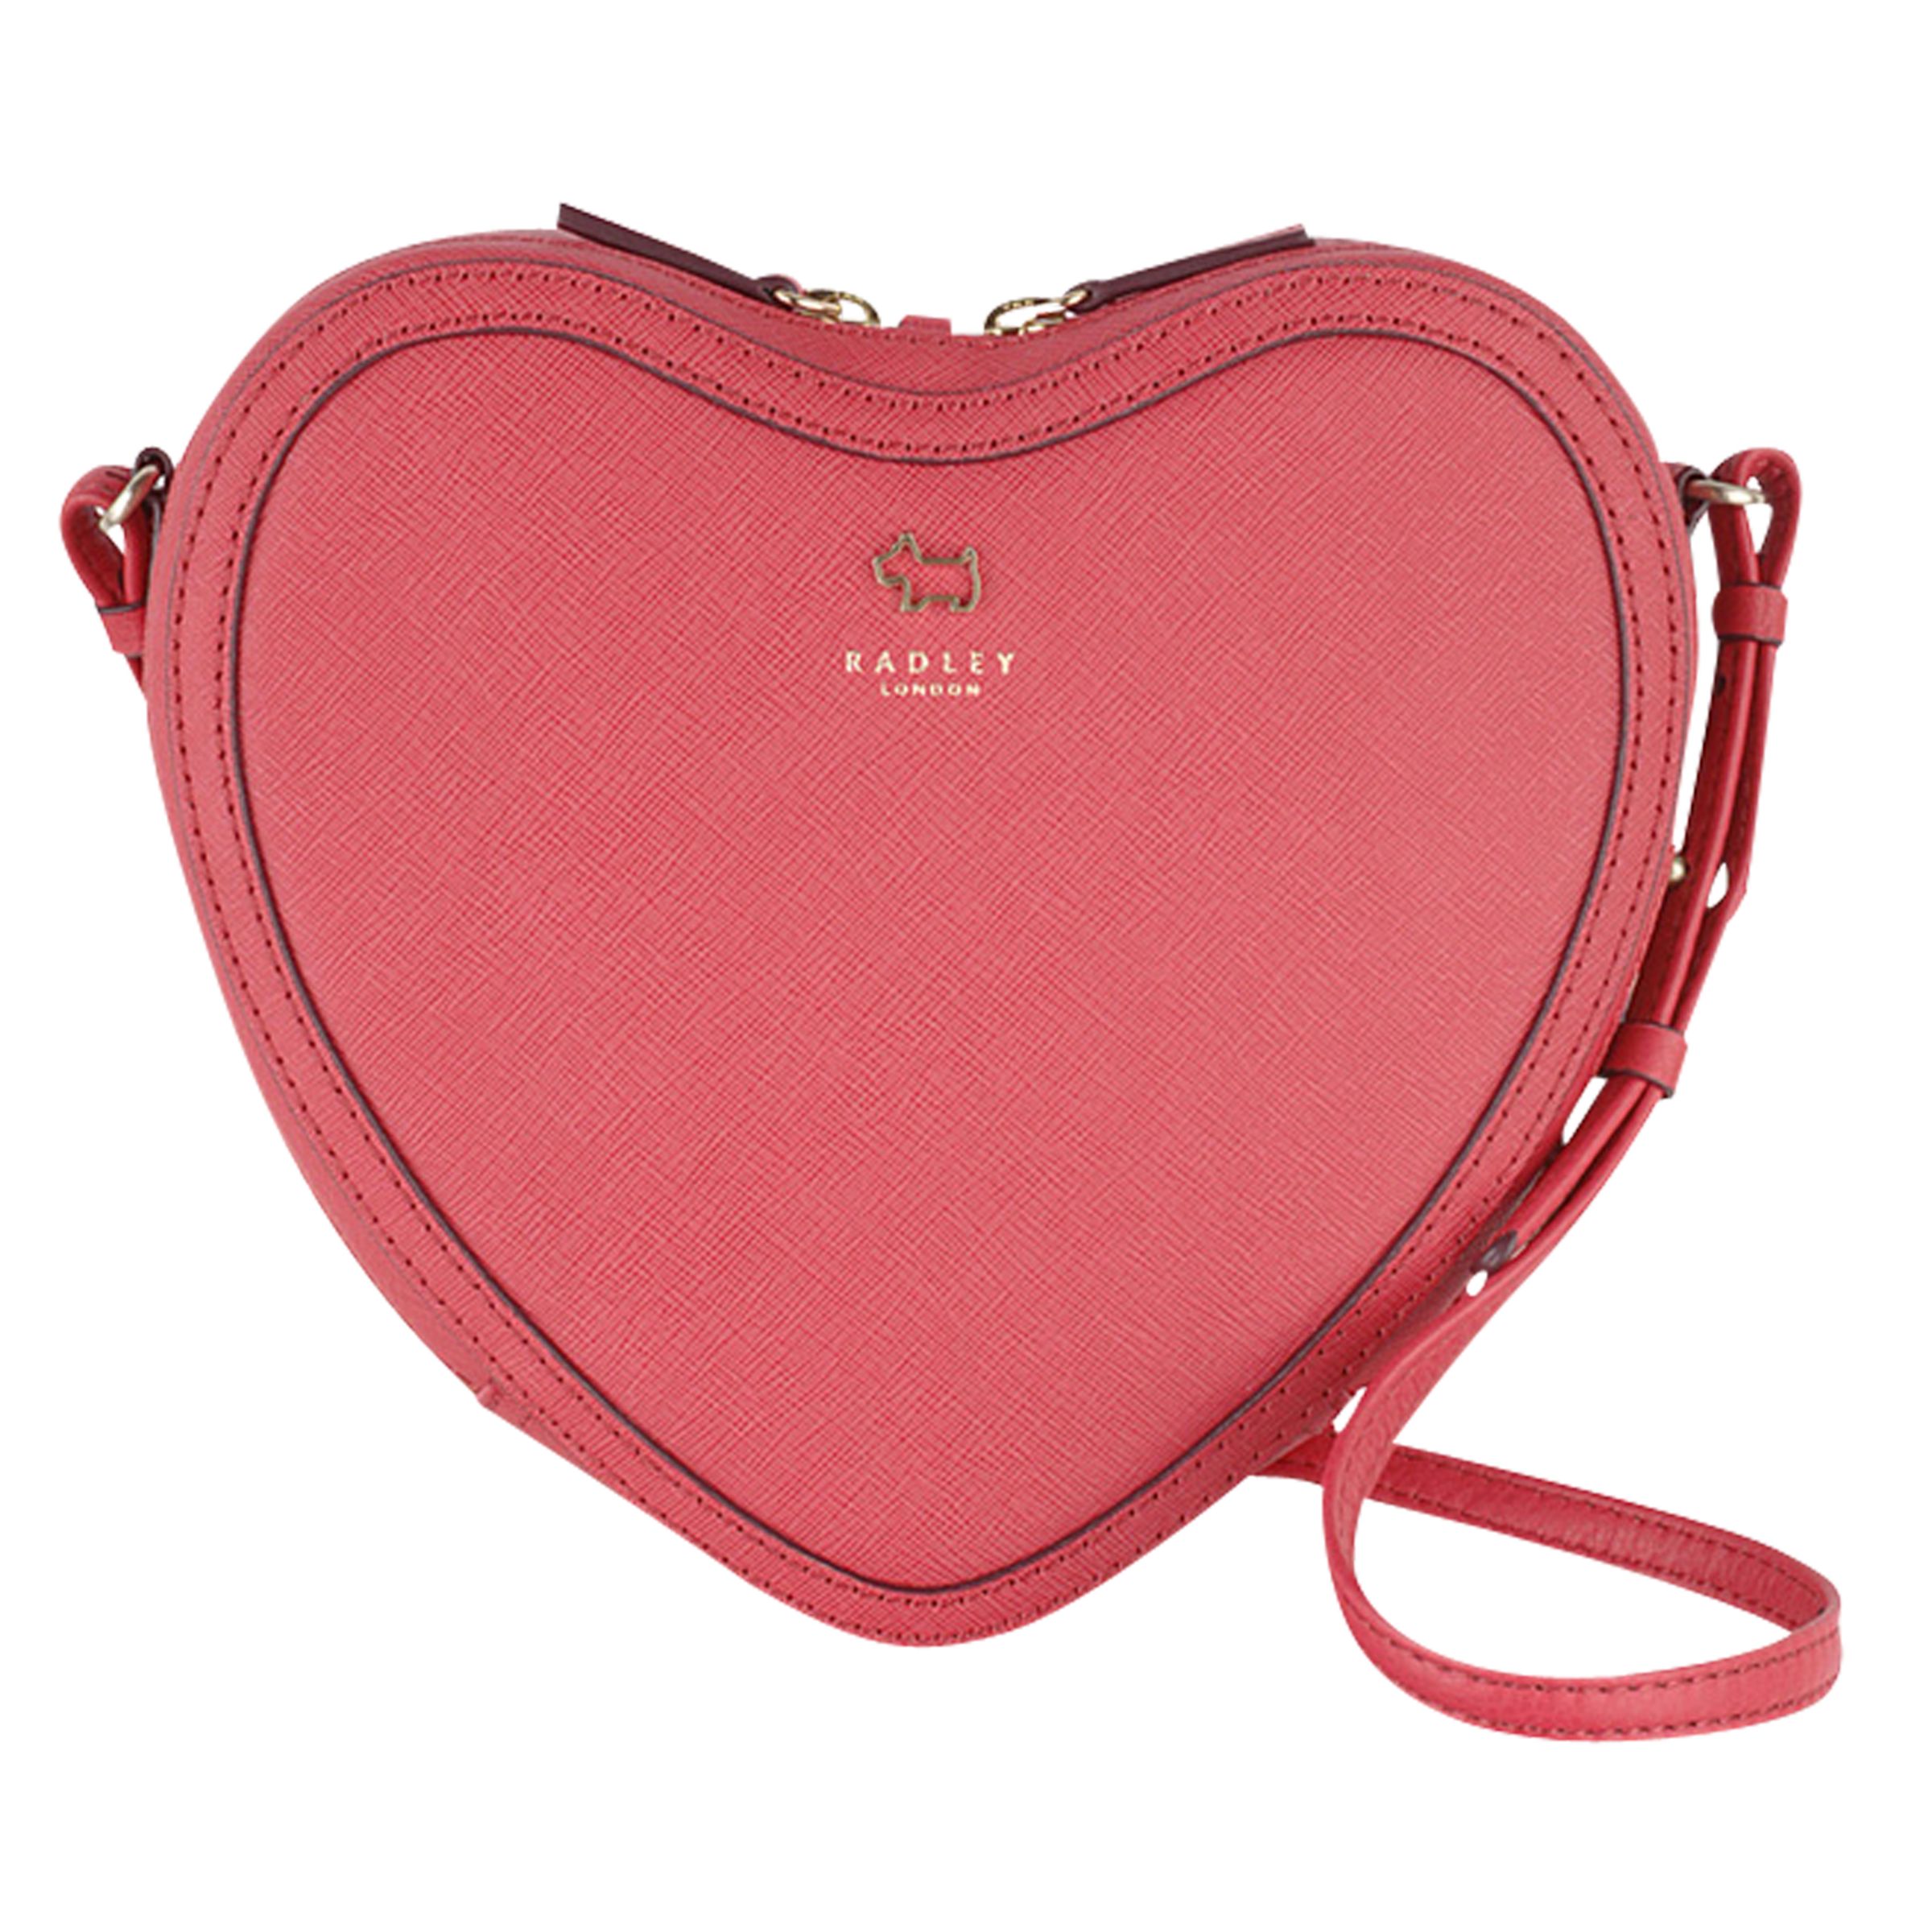 Radley Love Lane Leather Across Body Bag, Pink